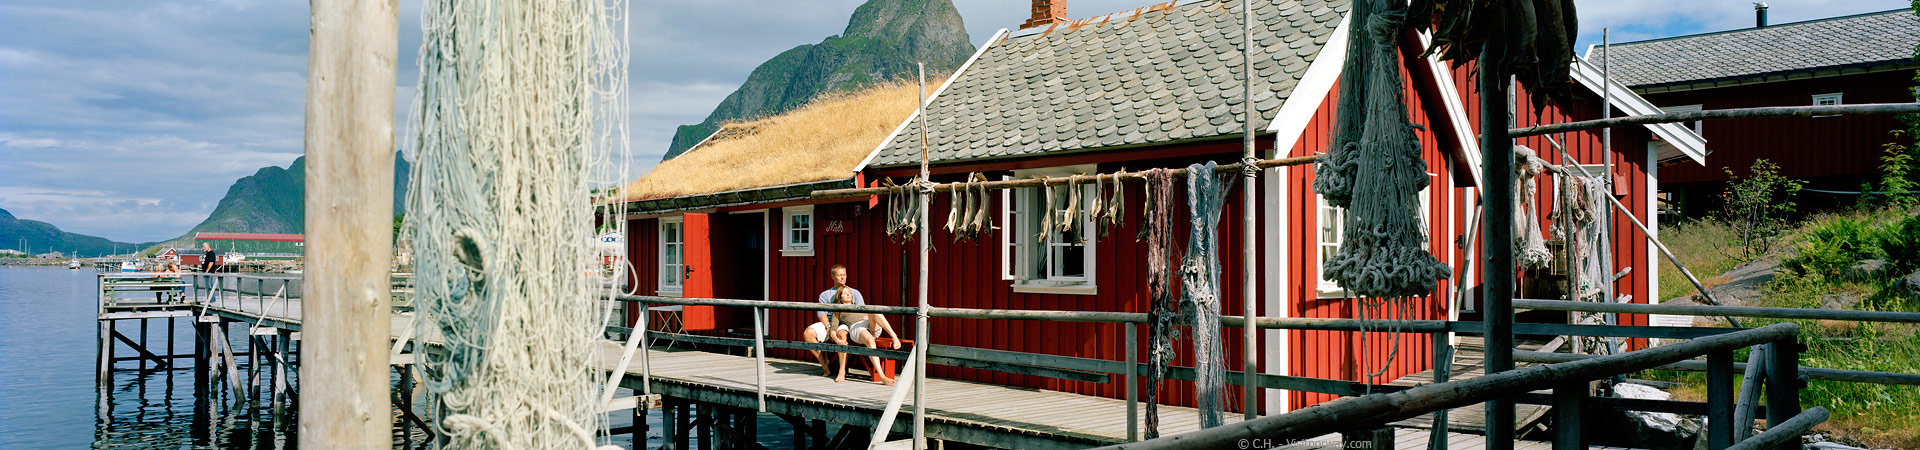 viaje a noruega islas lofoten casa pescadores rorbu wharf reine